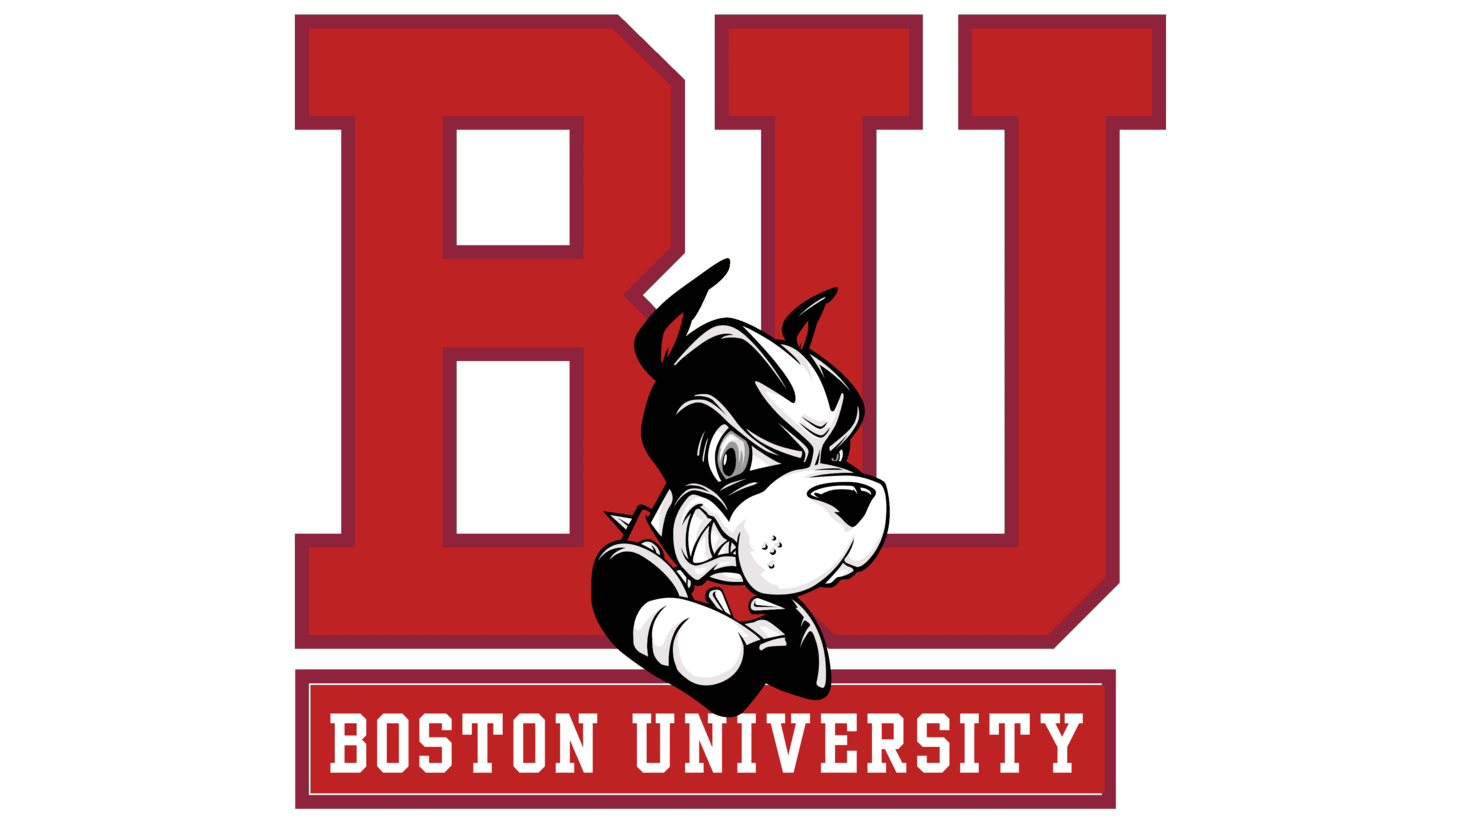 Boston university terriers sign 2005